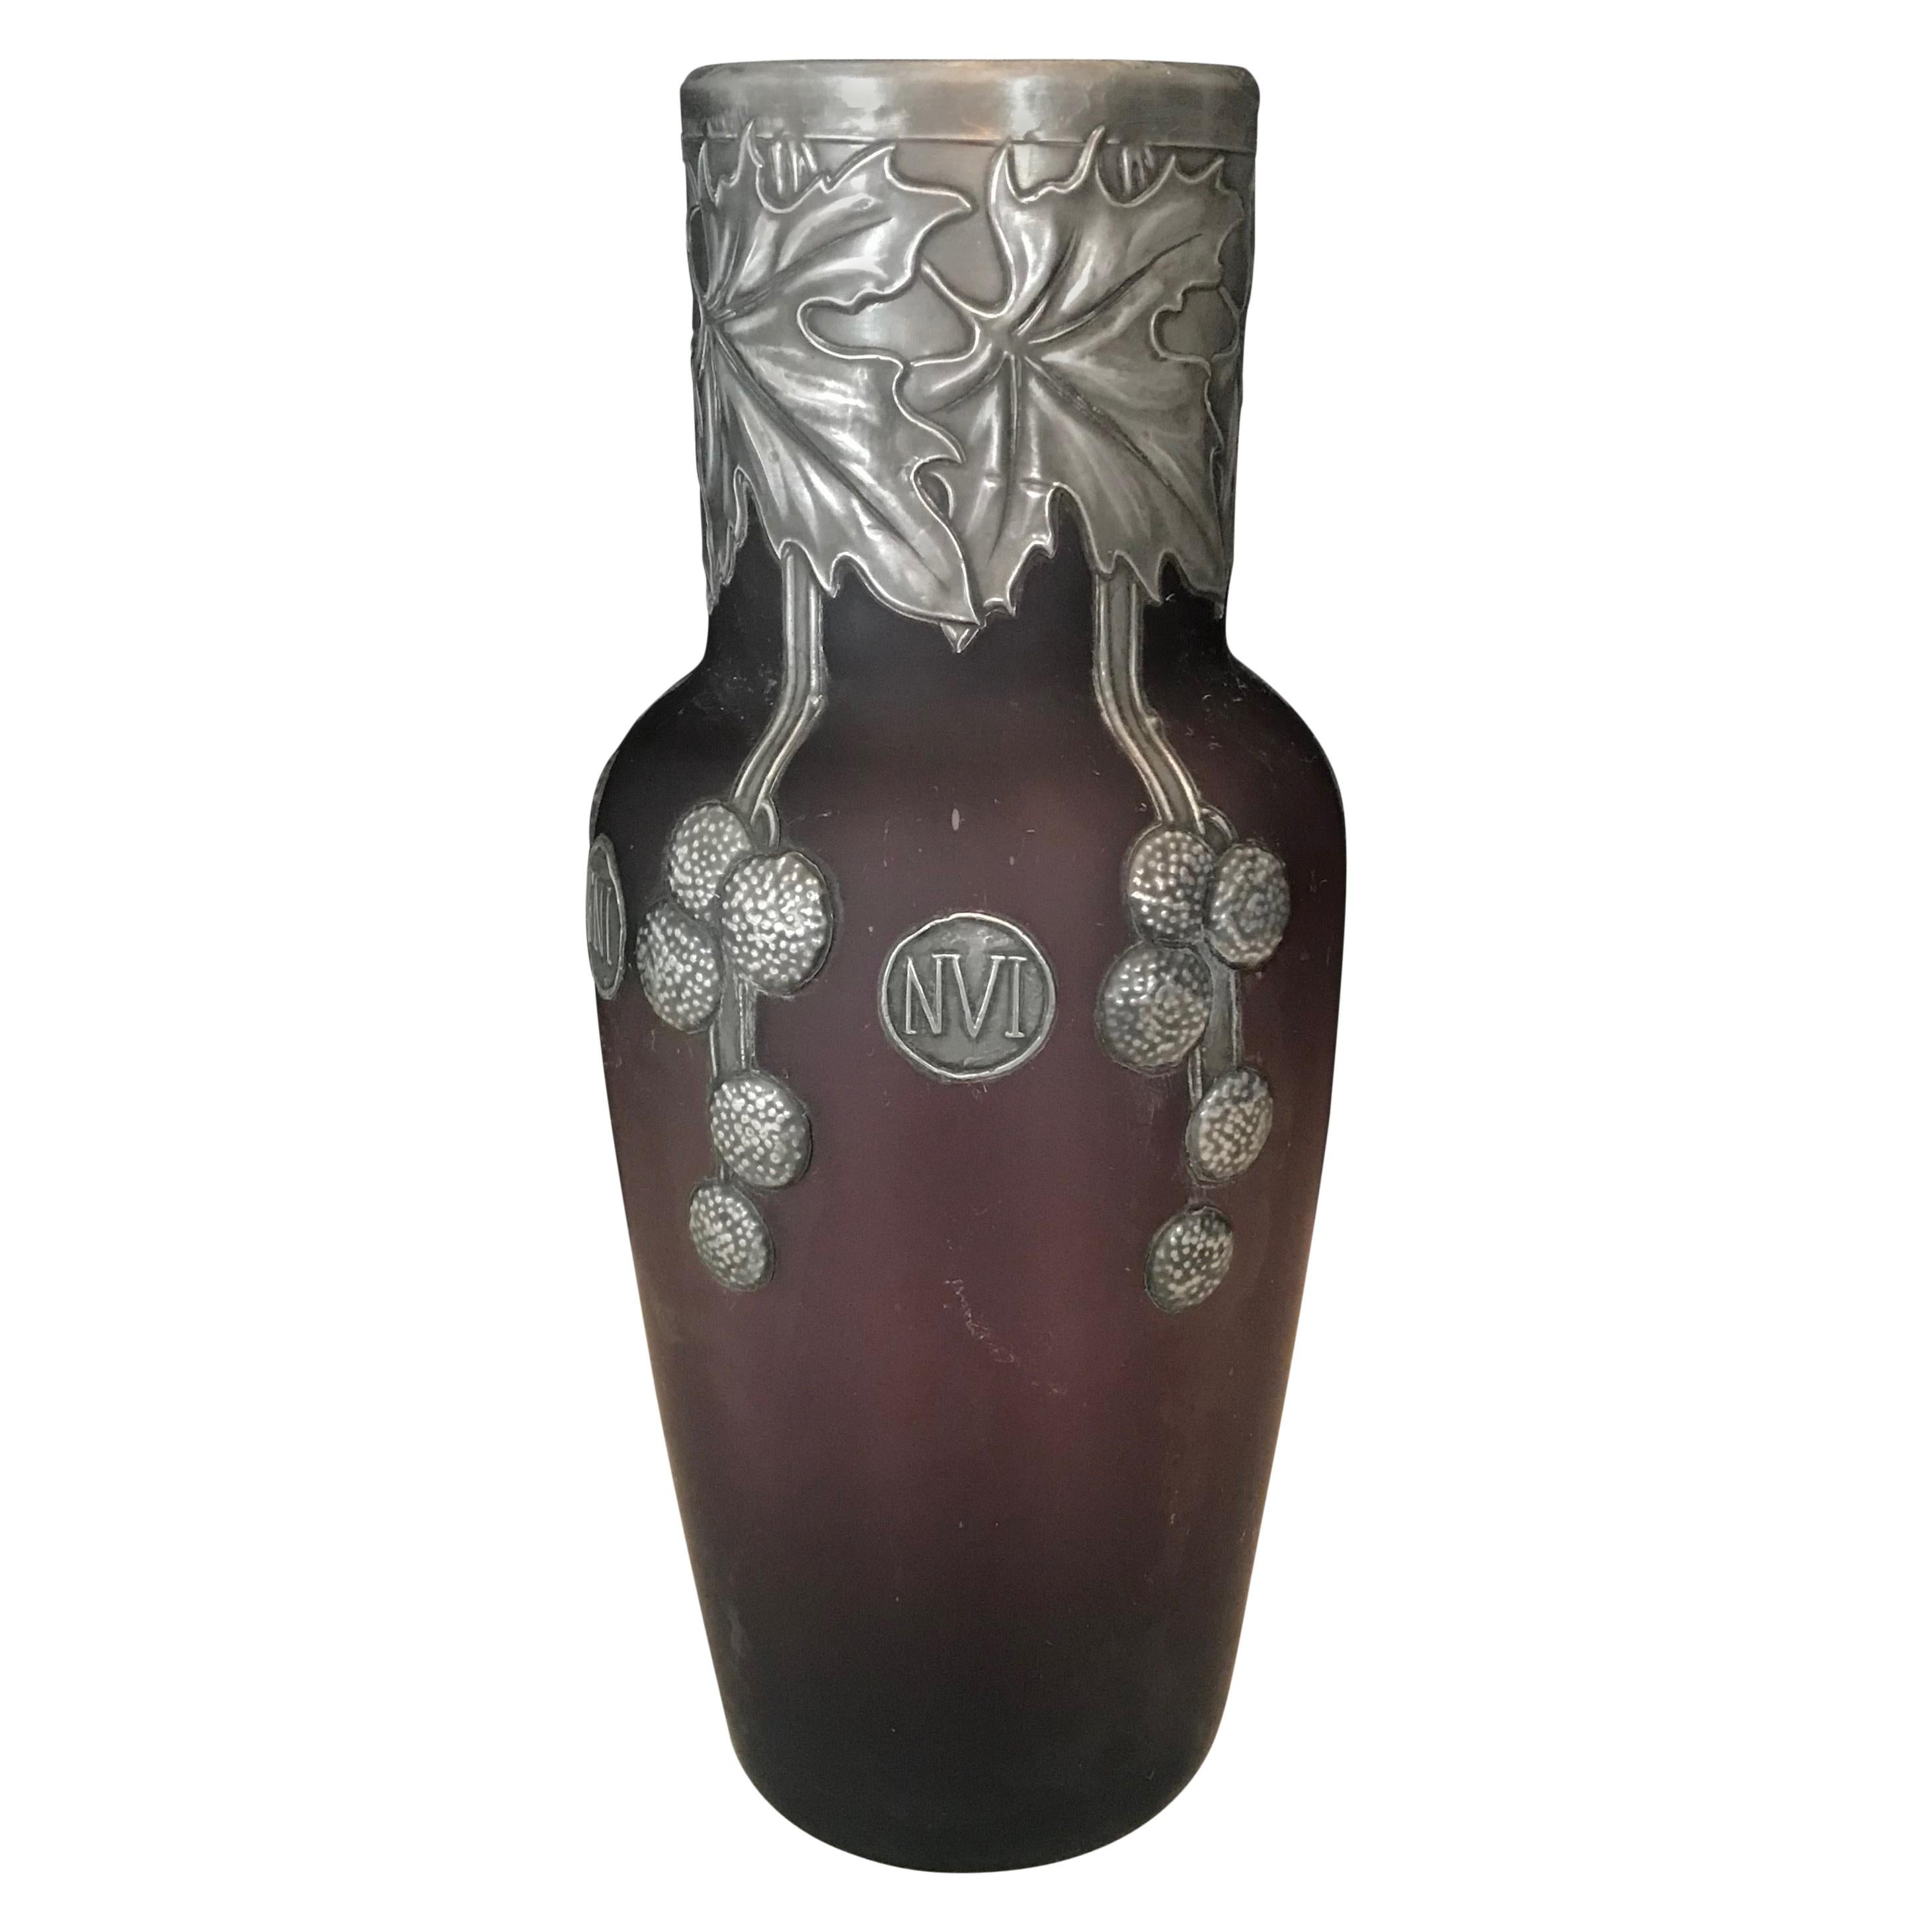 Rare French Art Nouveau Pewter Mounted Violet Opalescent Vase